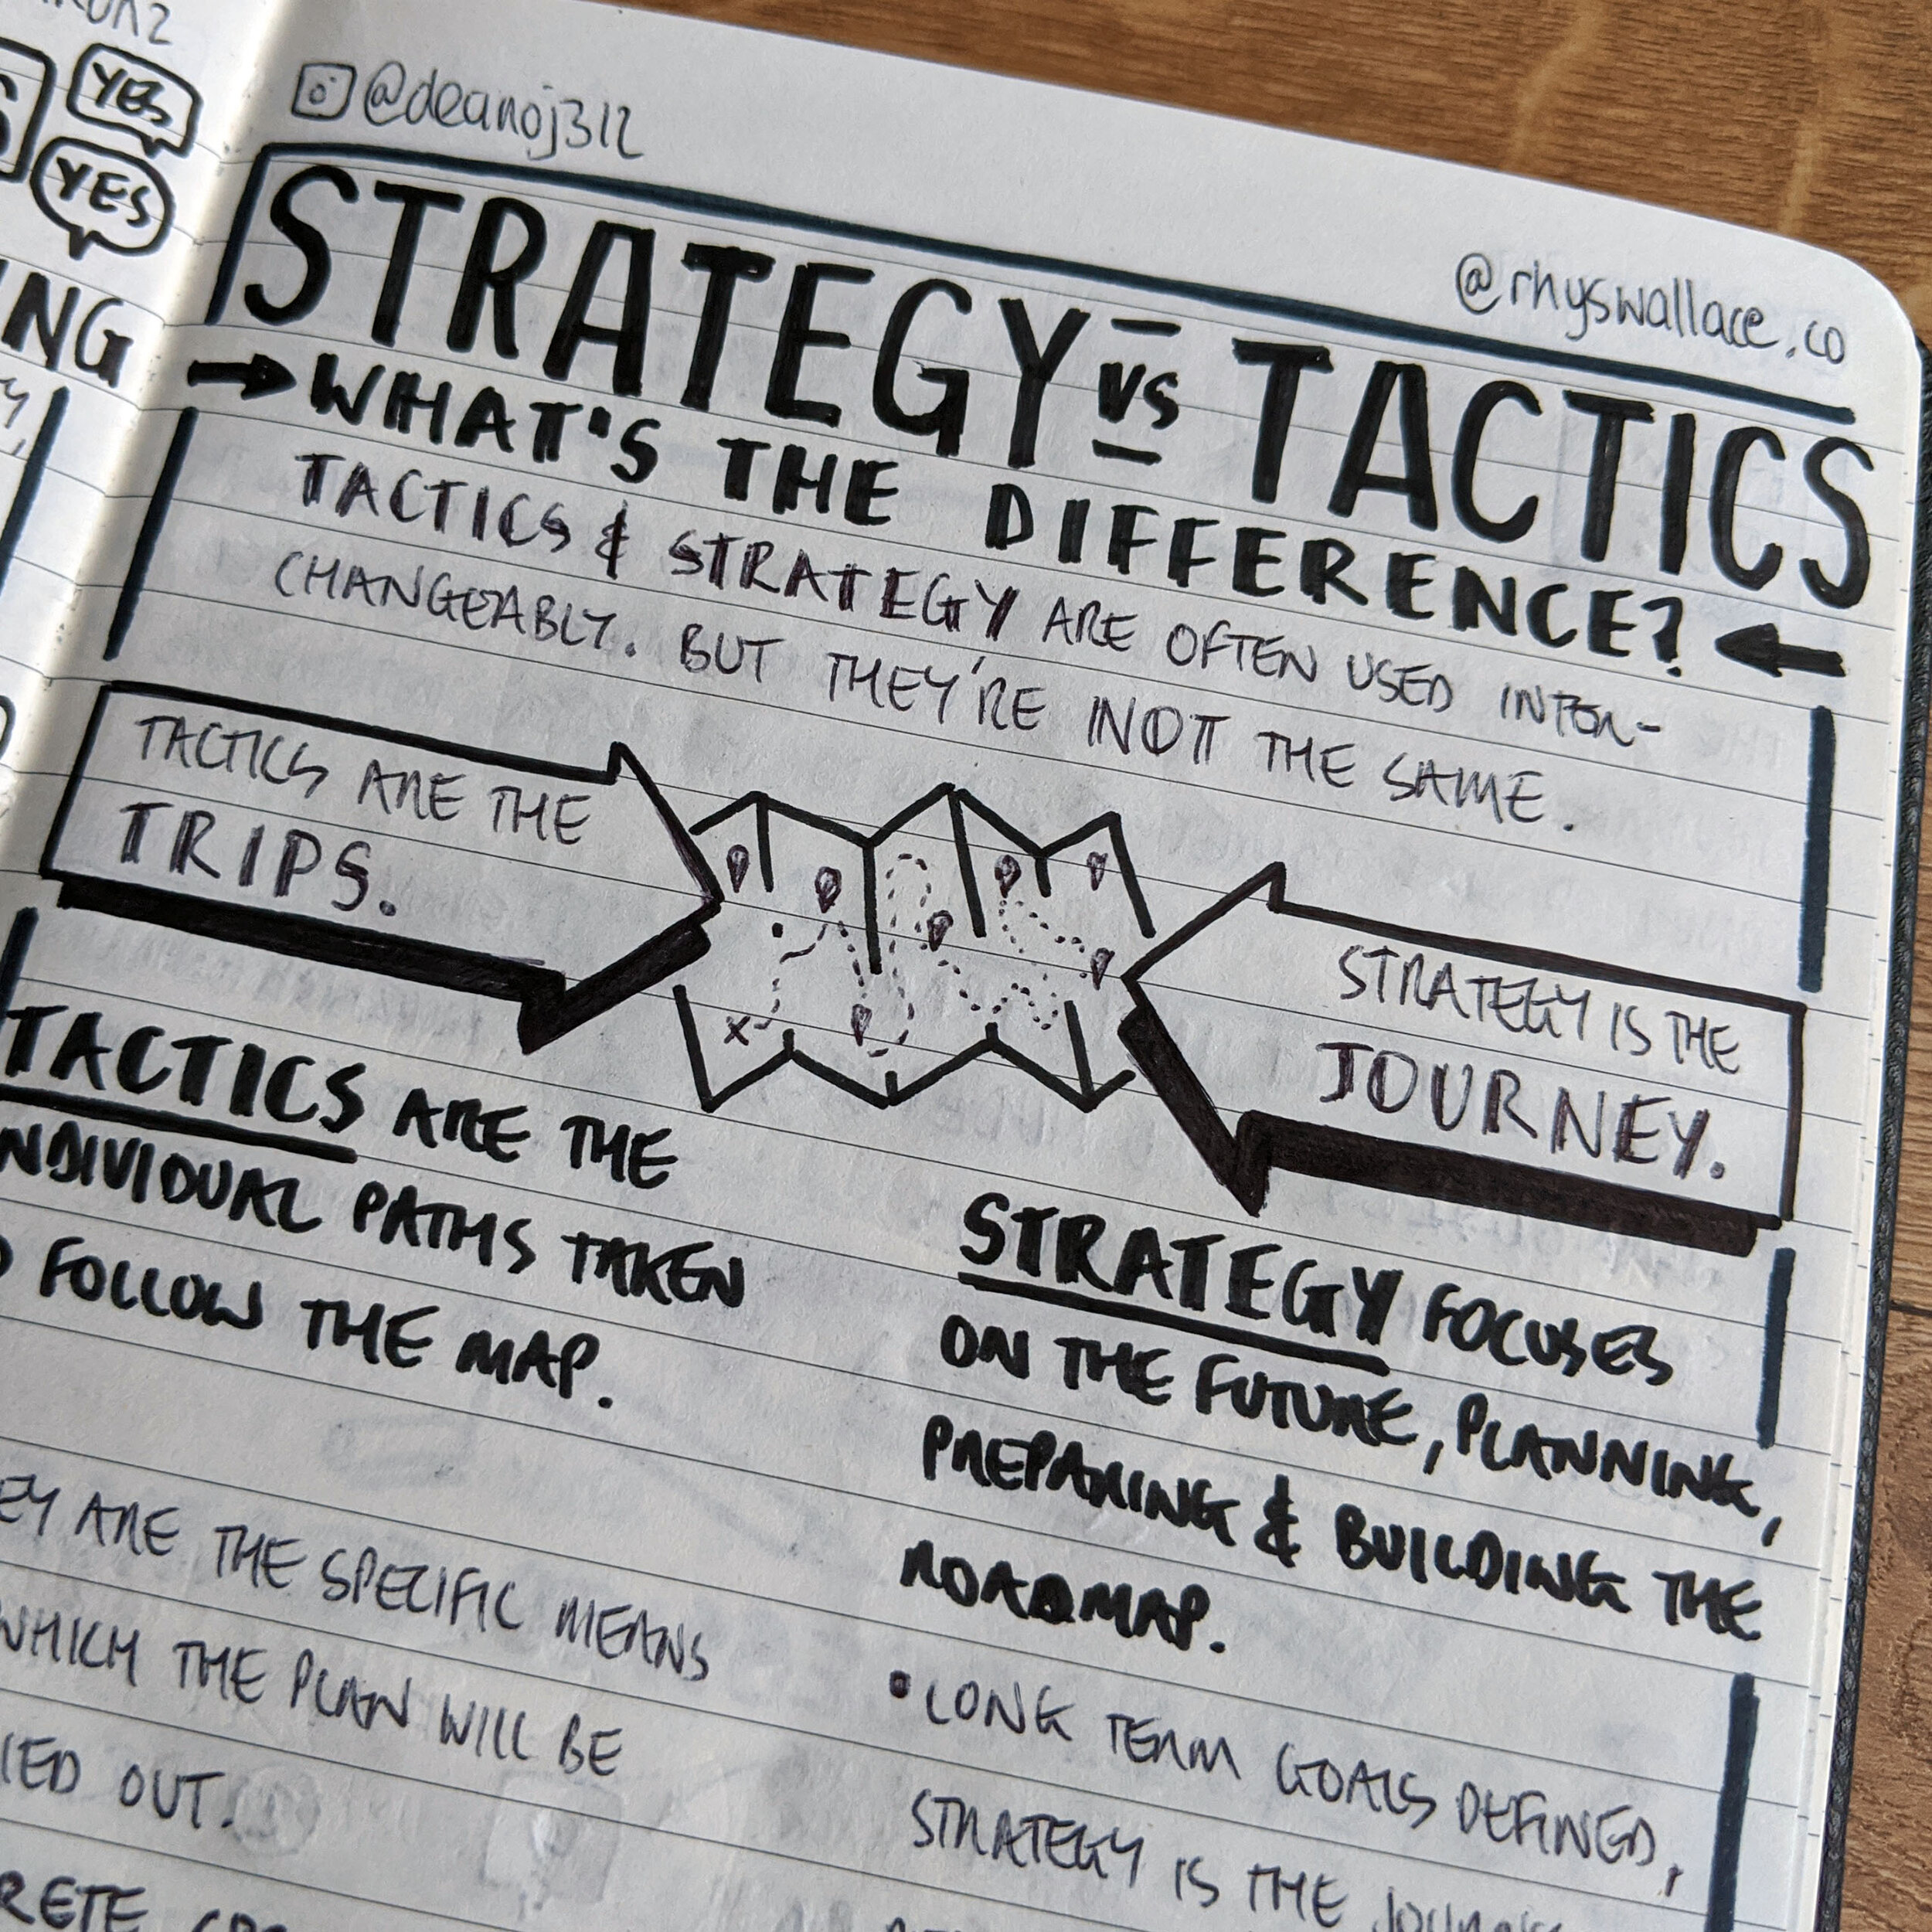 StrategyVsTactics7.jpg